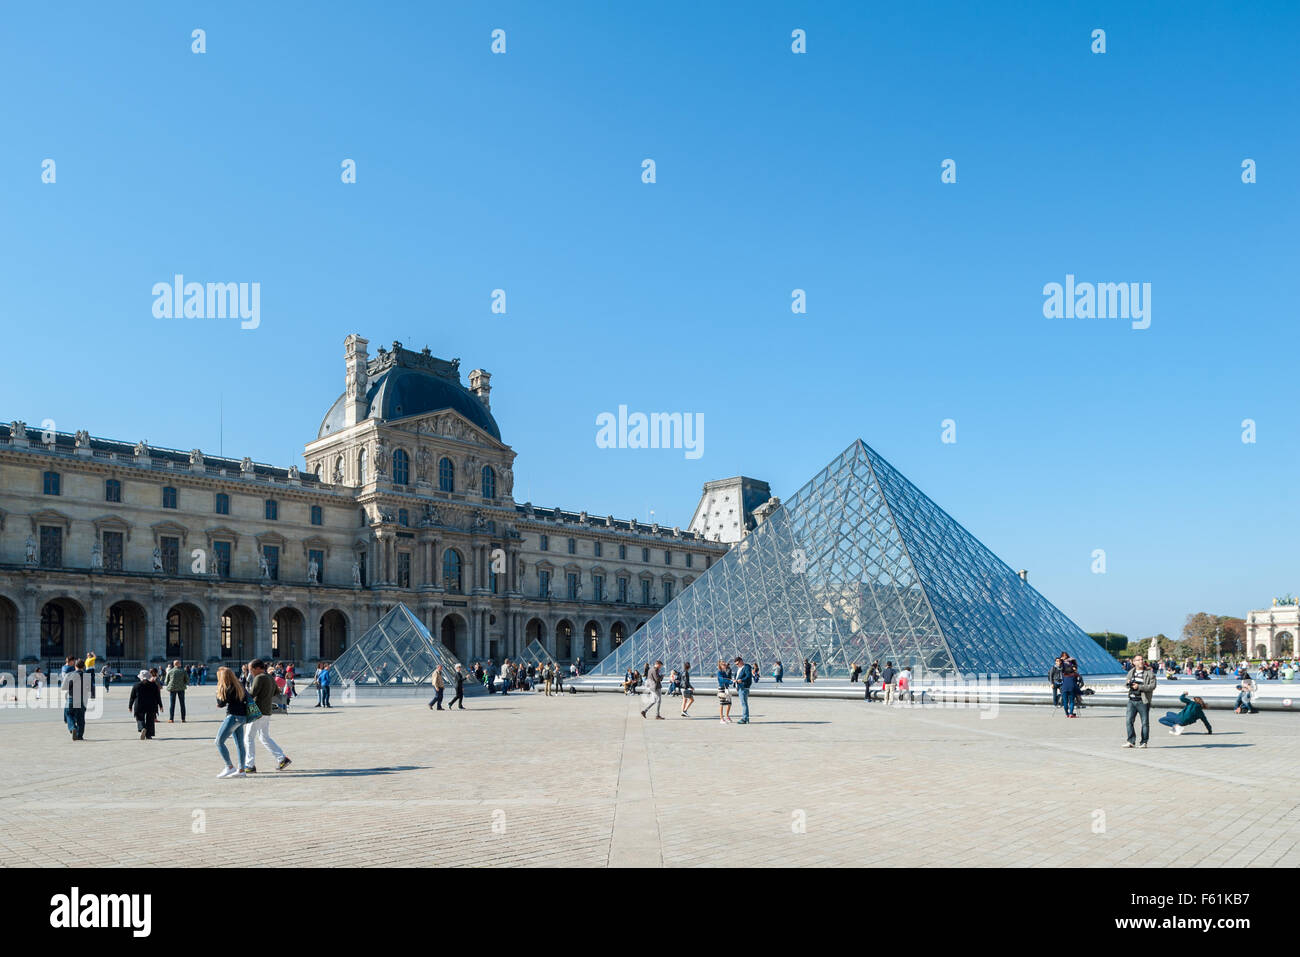 France, Paris, Louvre pyramid - cour Napoleon Stock Photo